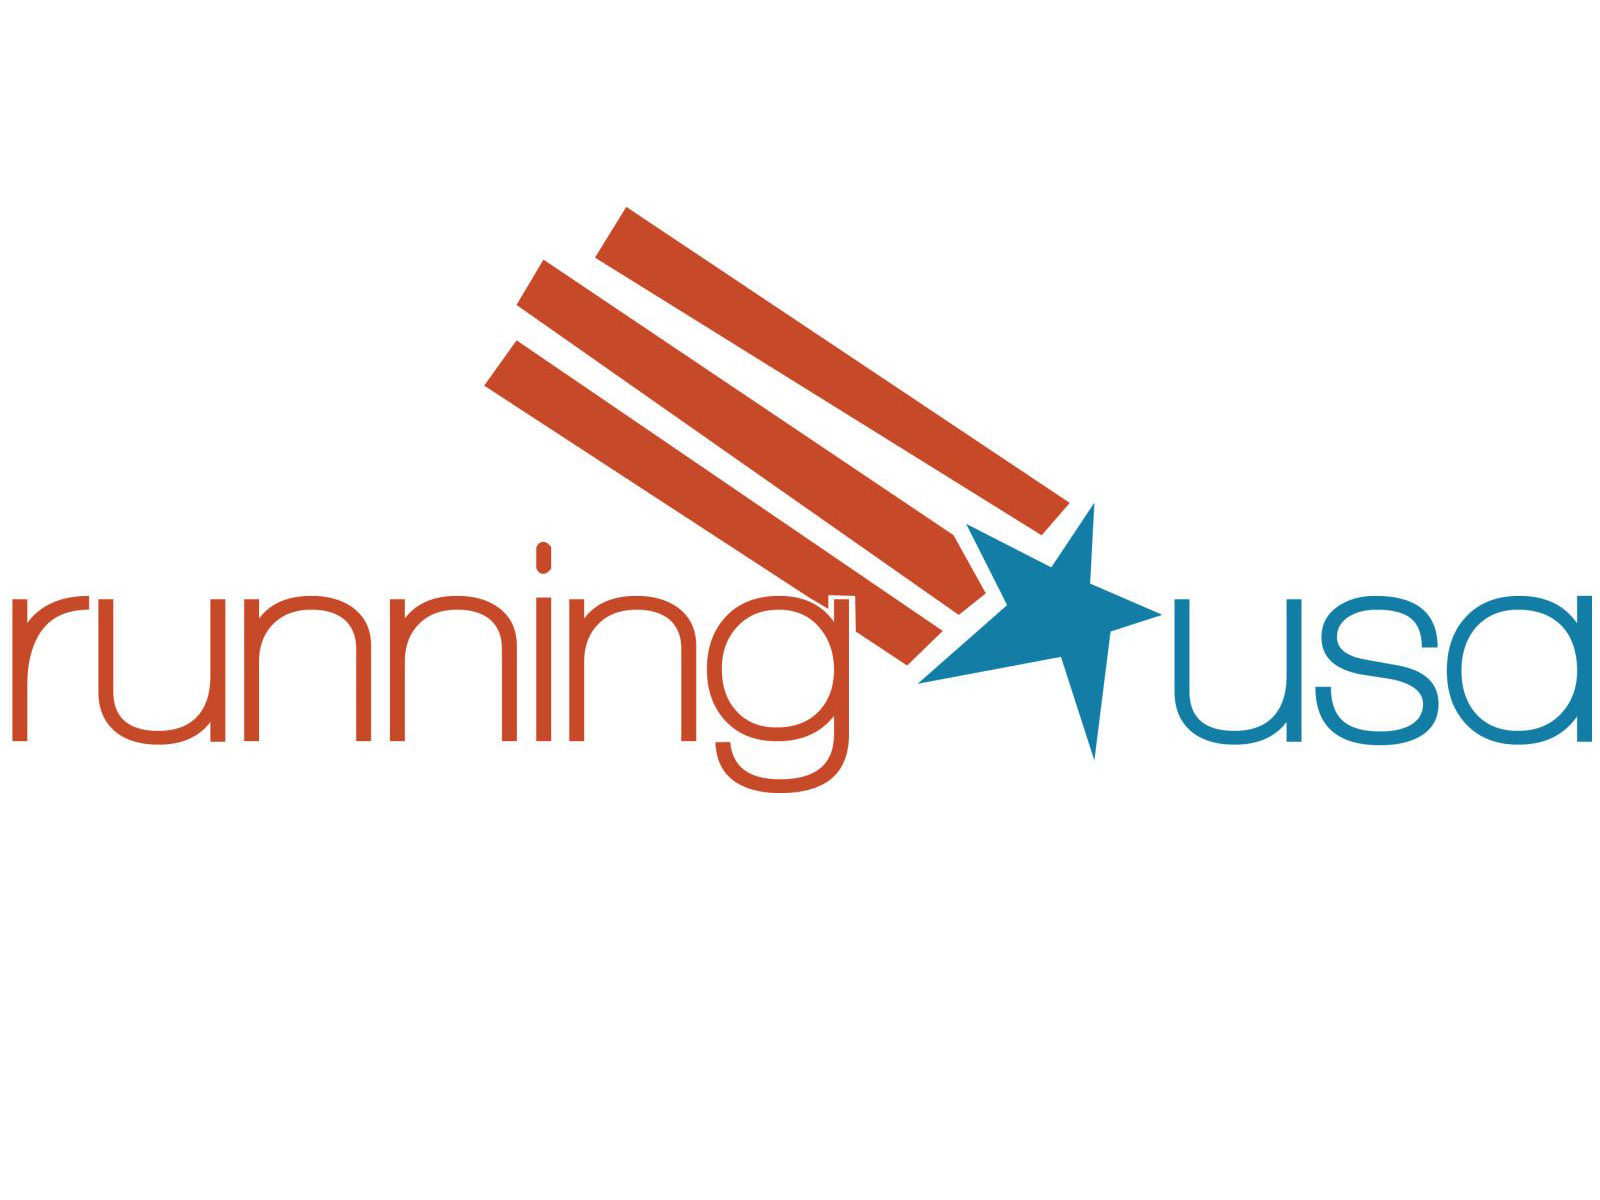 Running USA logo